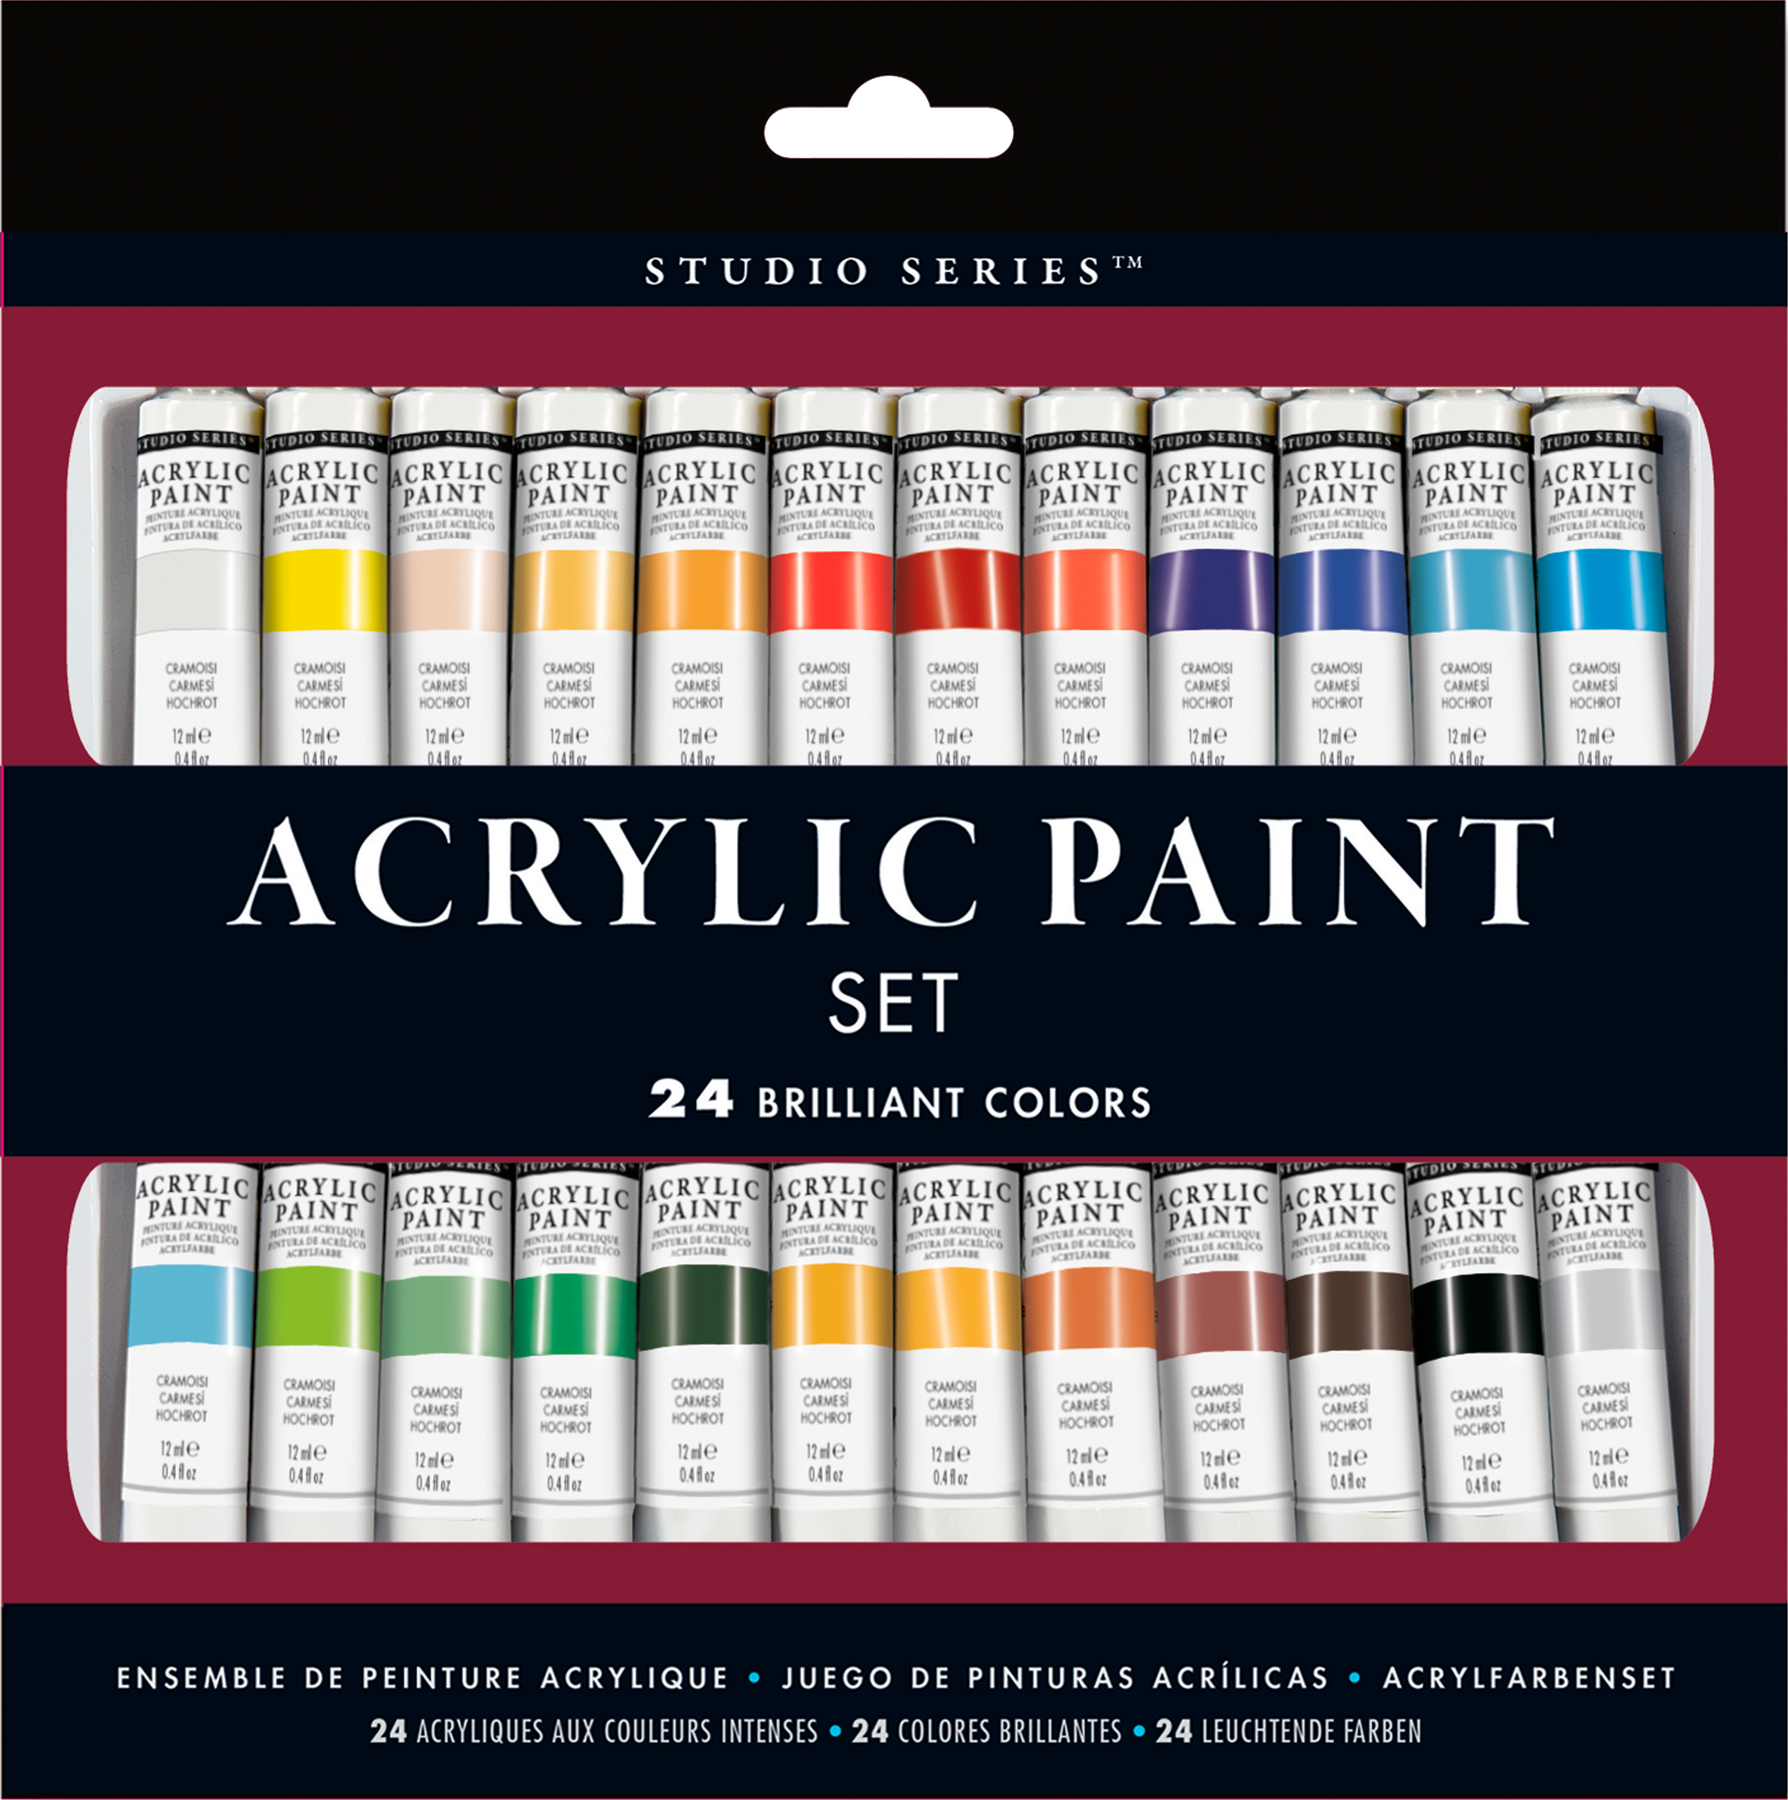 Studio Series Acrylic Paint Marker Set (12-Piece Set)